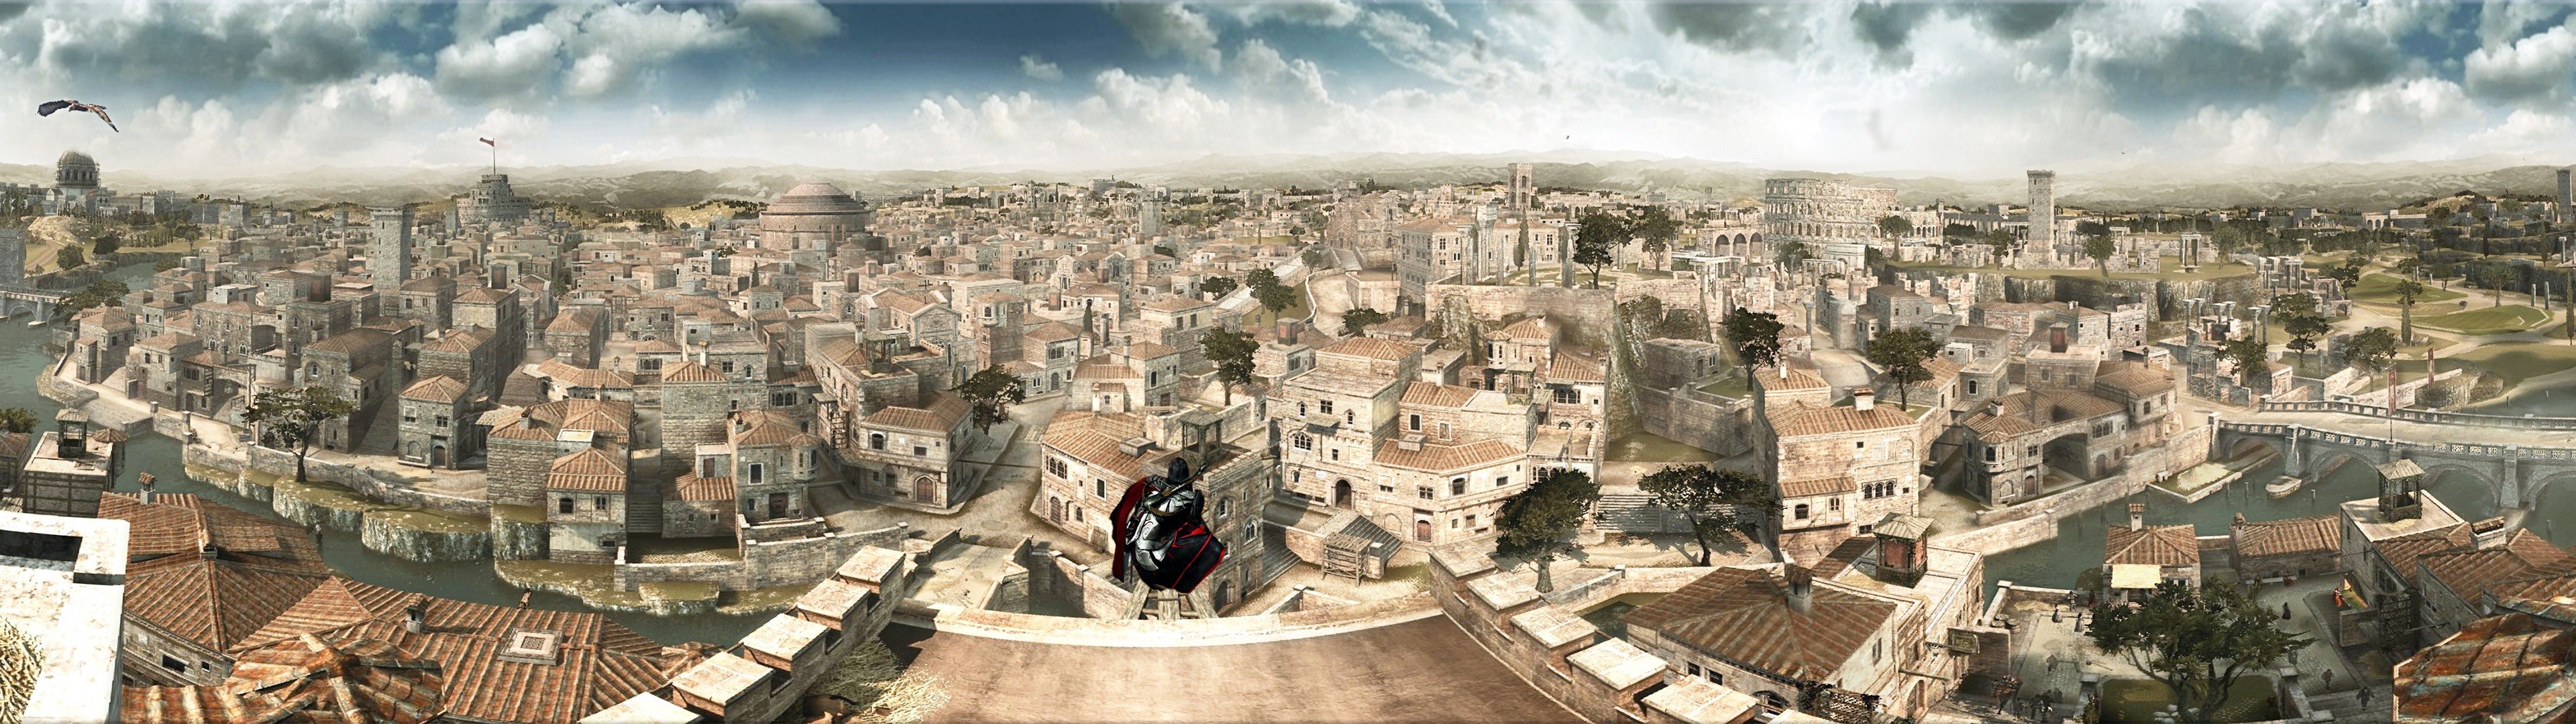 General 3840x1080 Assassin's Creed video games Ezio Auditore da Firenze panorama